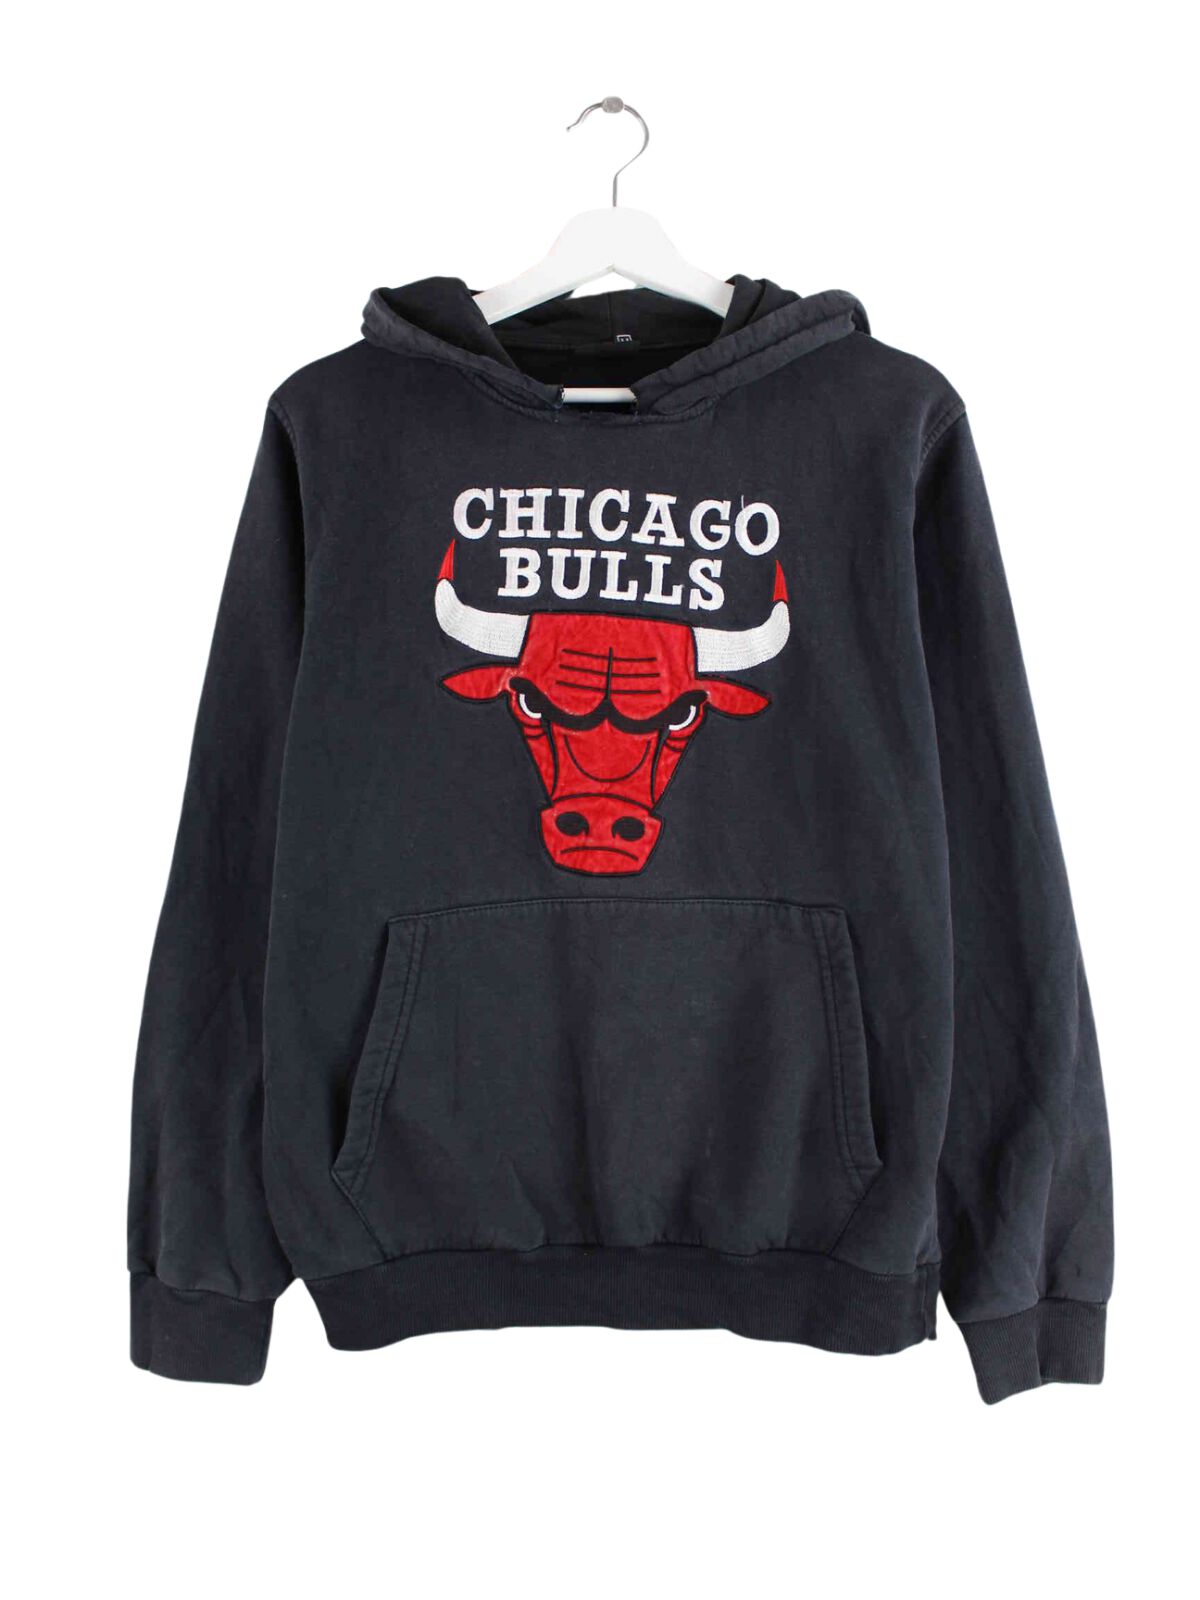 Vintage Chicago Bulls Embroidered Hoodie Schwarz M (front image)